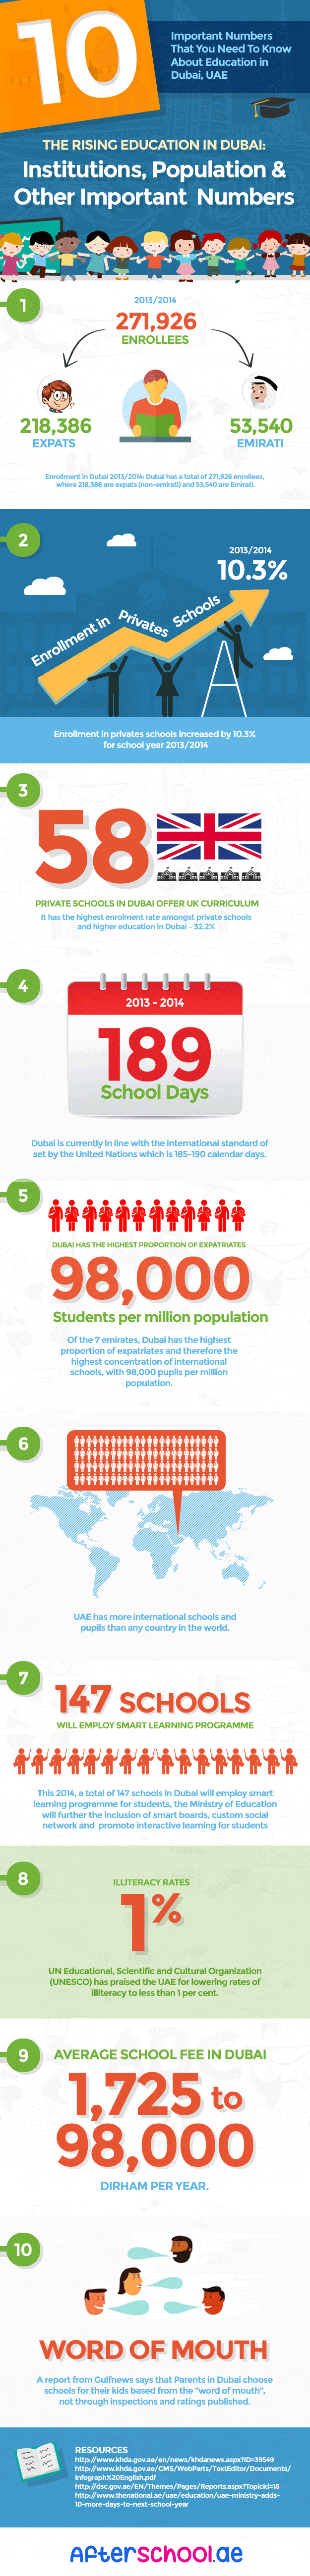 The Rising Education in Dubai Infographic